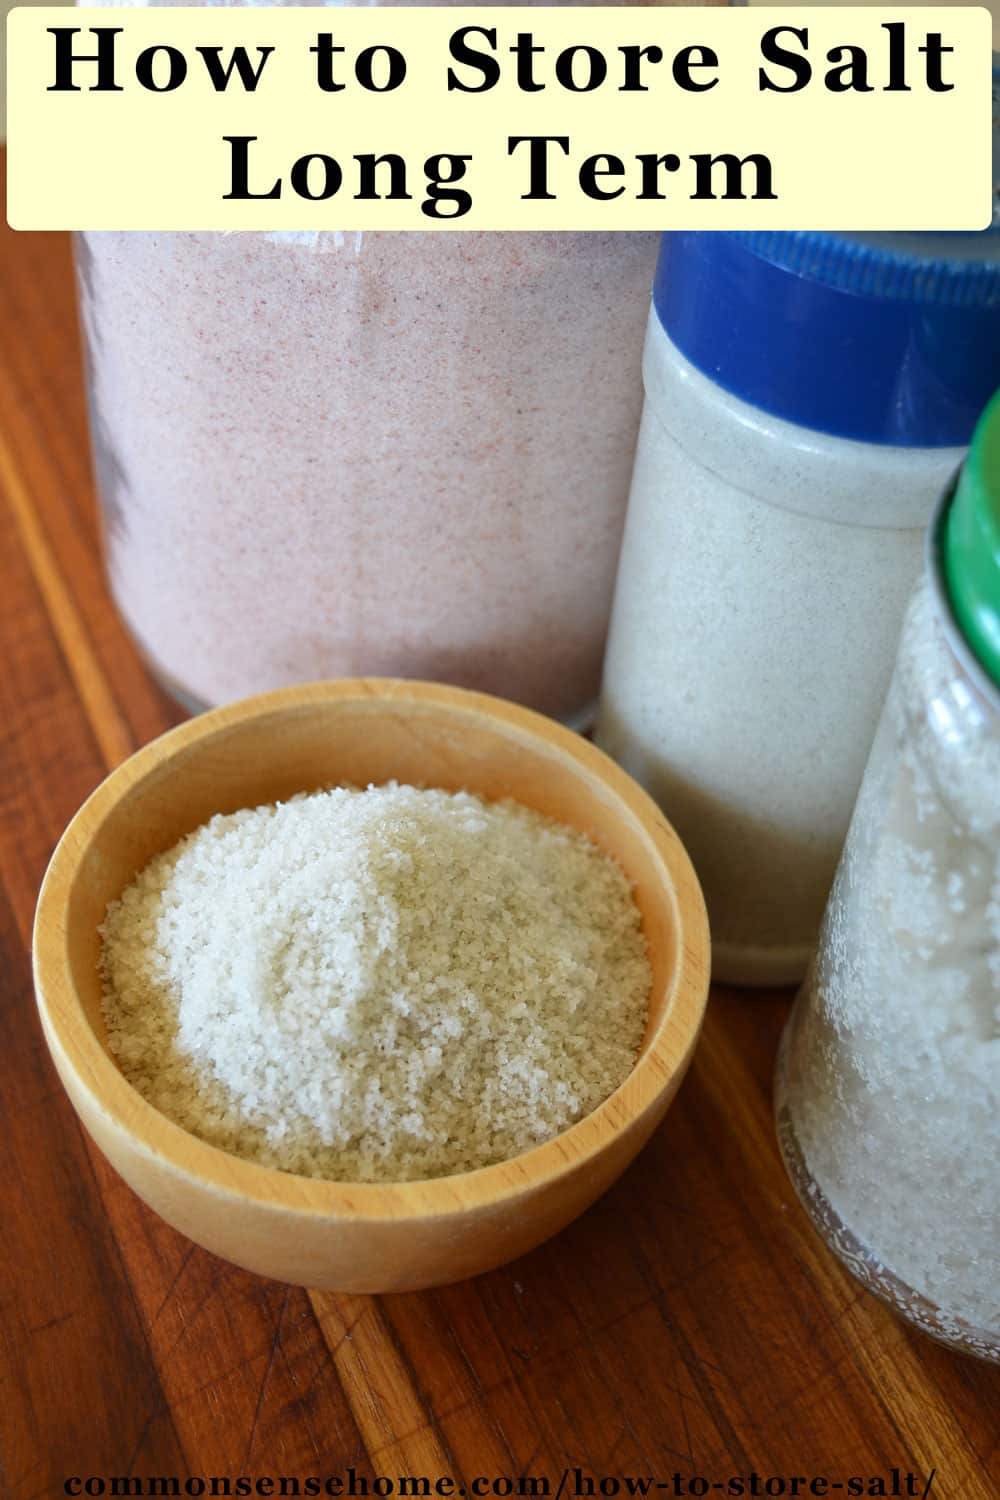 How to Store Salt Long Term